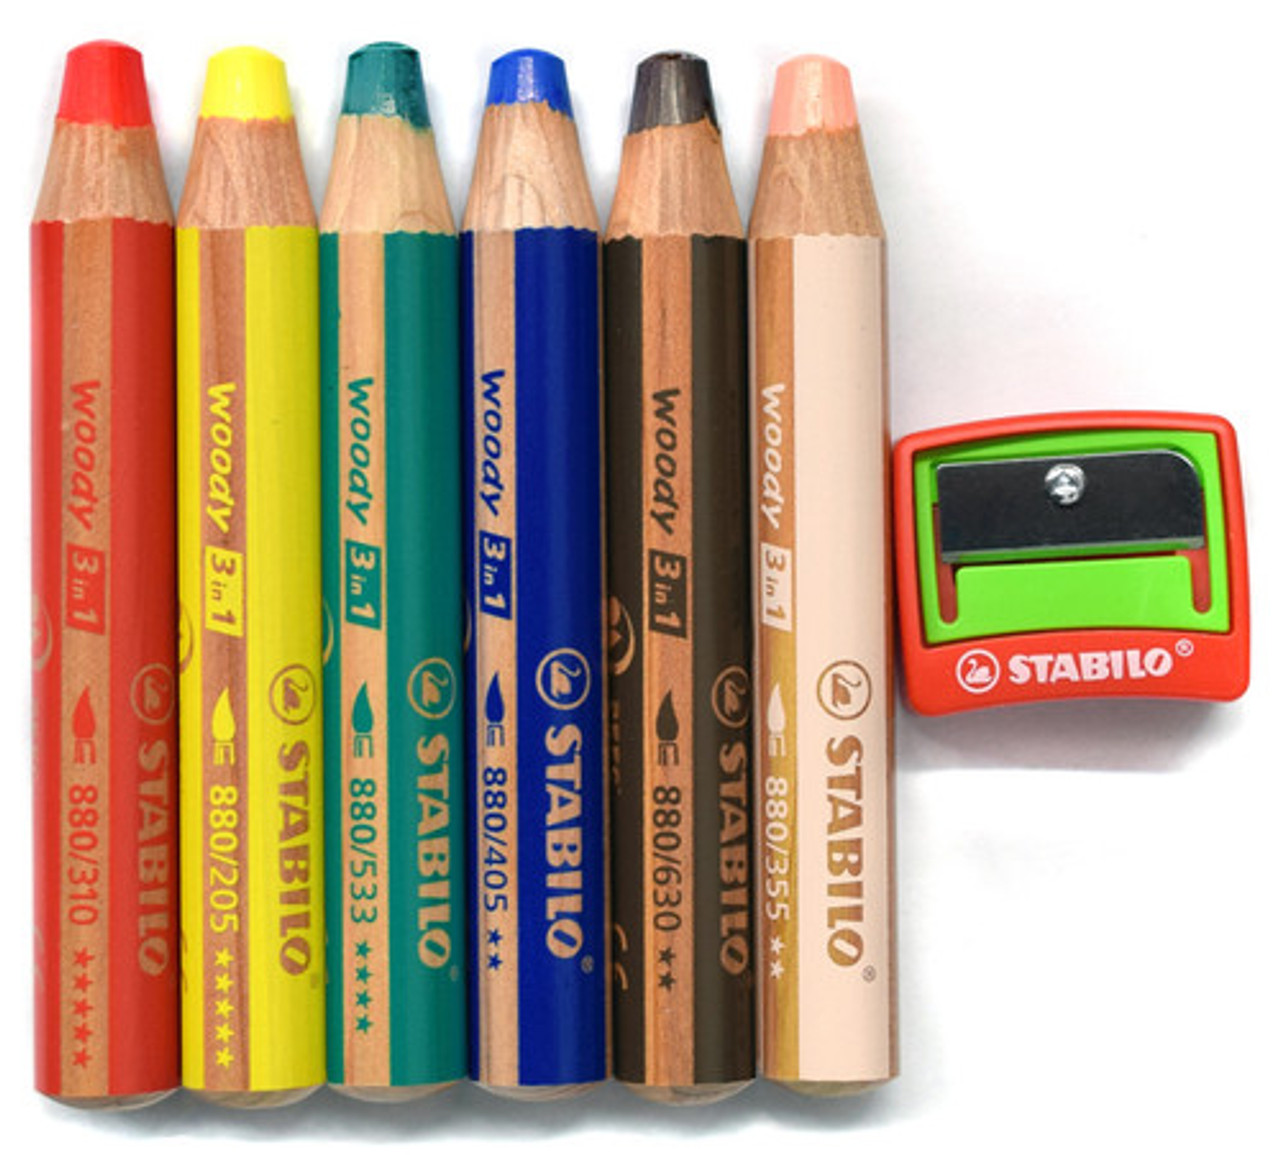 Stabilo Woody 3 in 1 Color Pencil